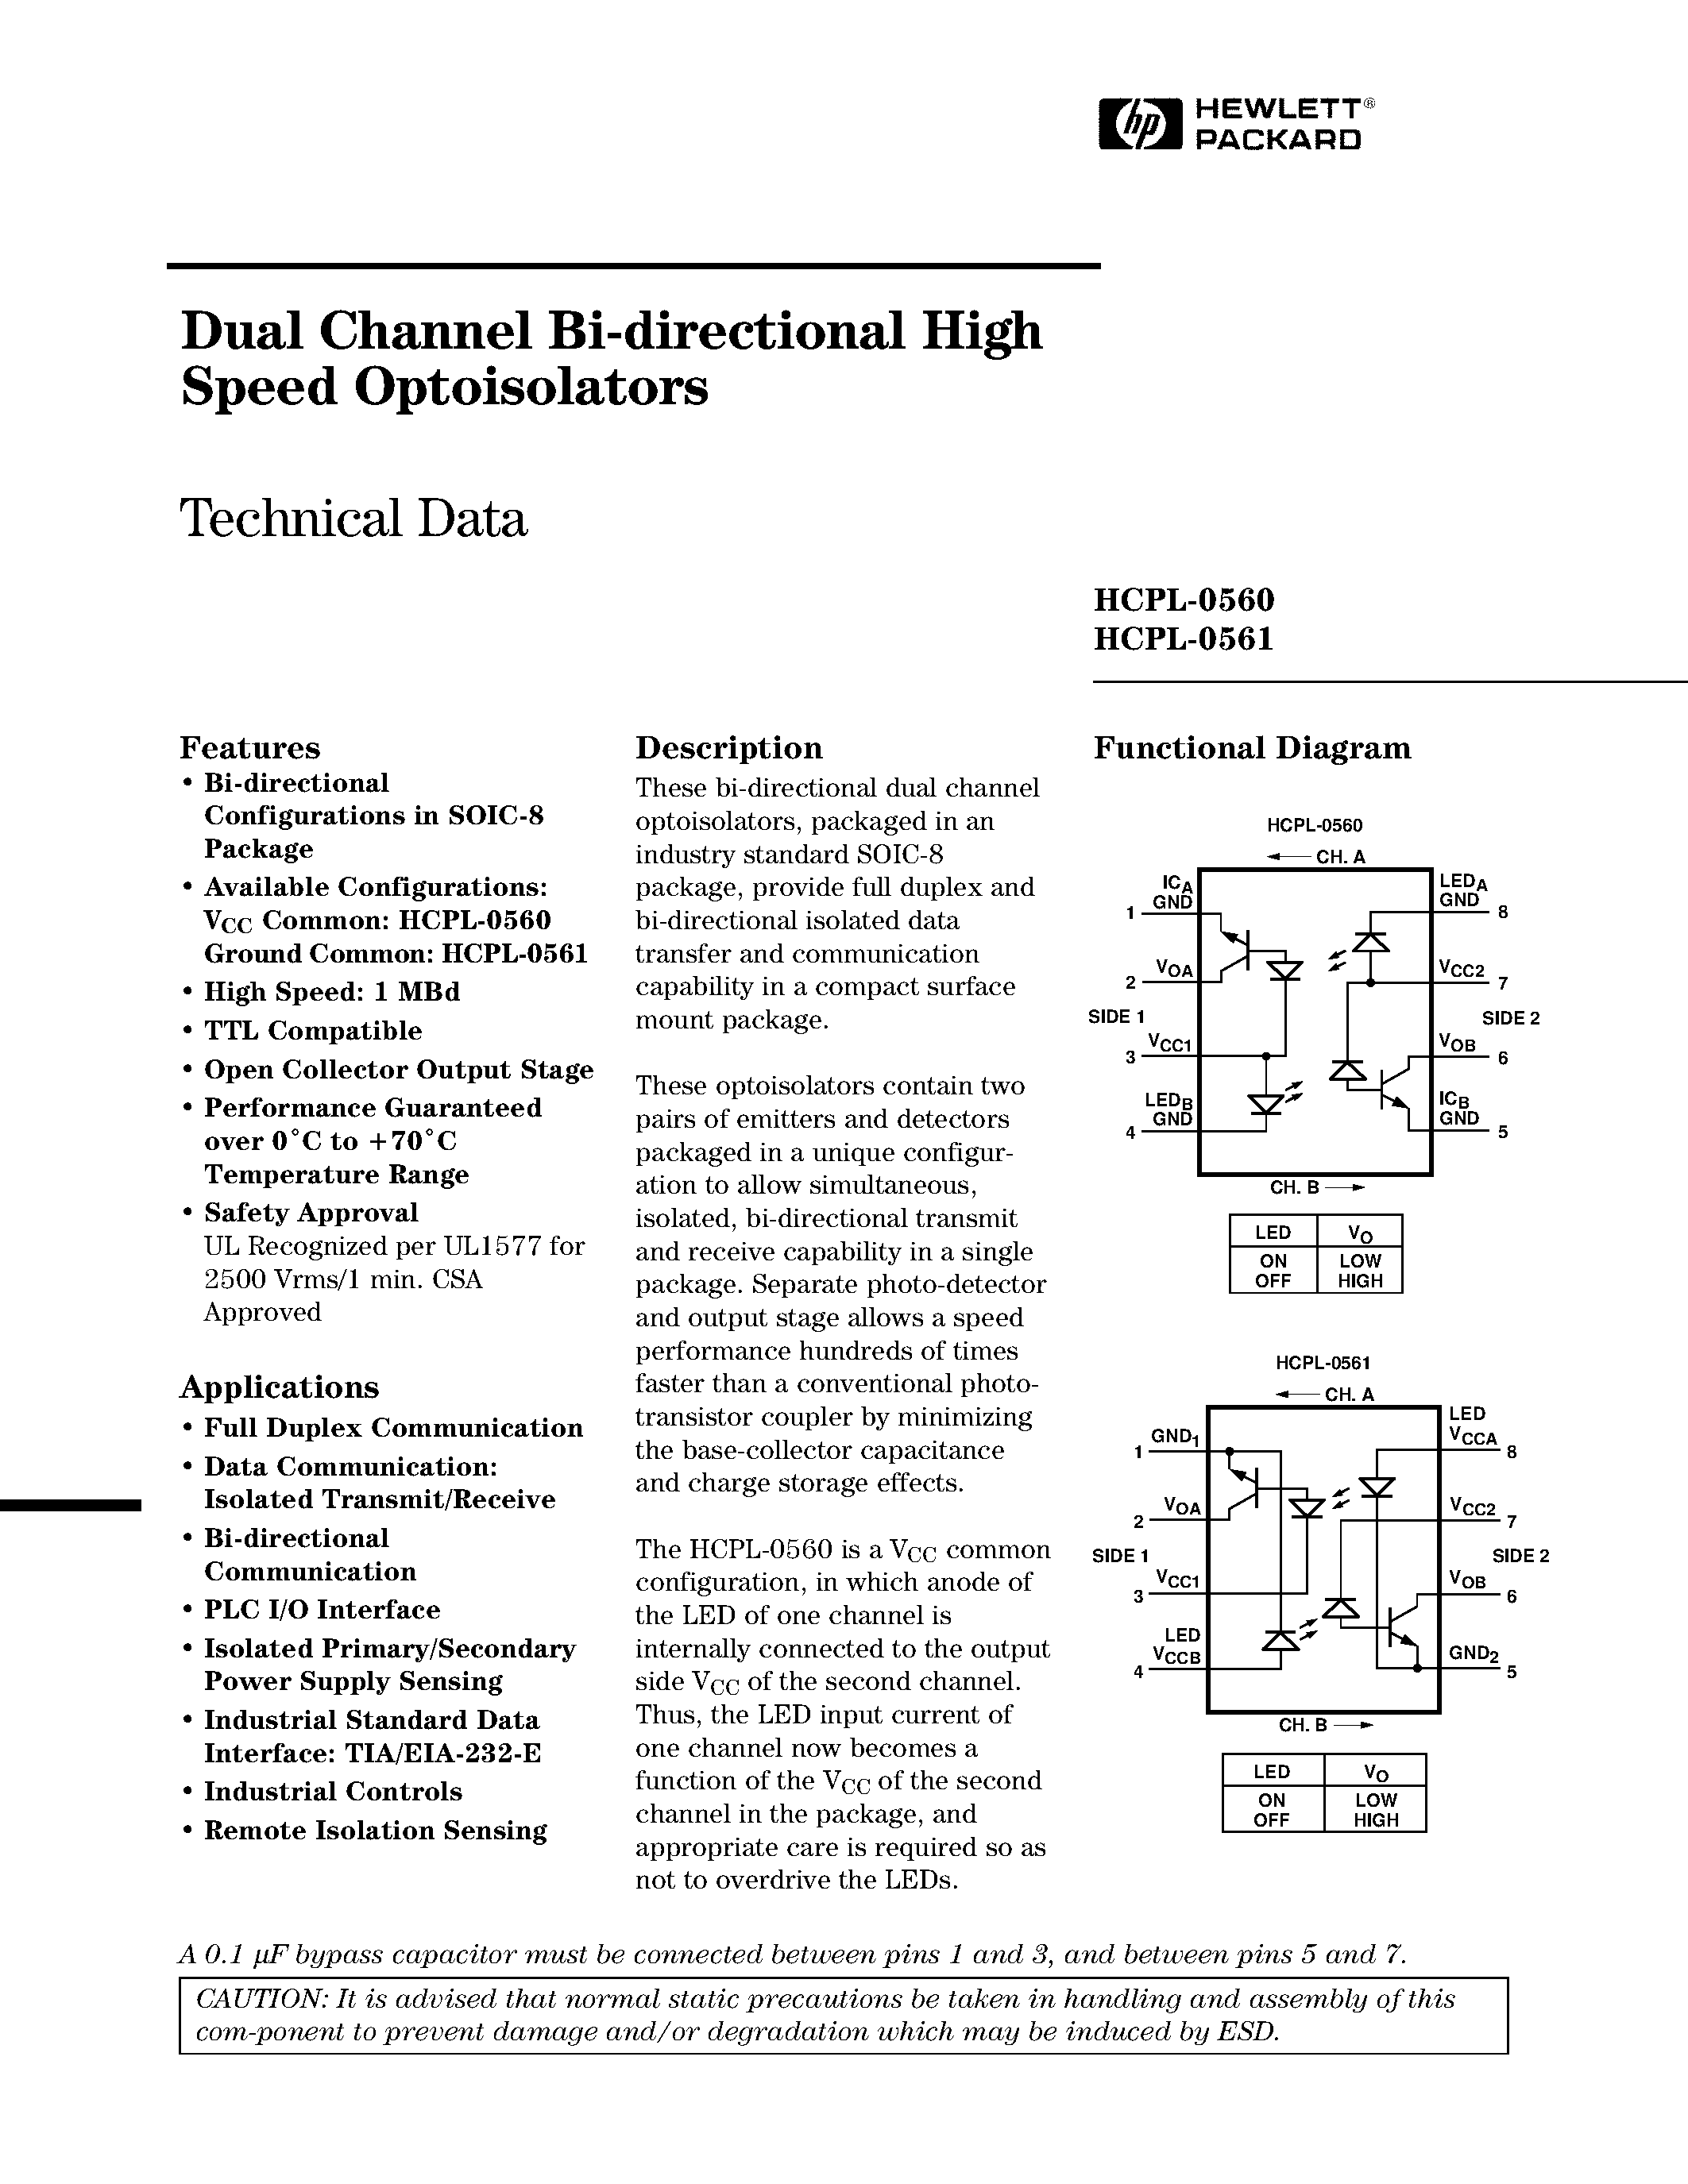 Datasheet HCPL-0560 - (HCPL-0560 / HCPL-0561) Dual Channel Bi-directional High Speed Optoisolators page 1